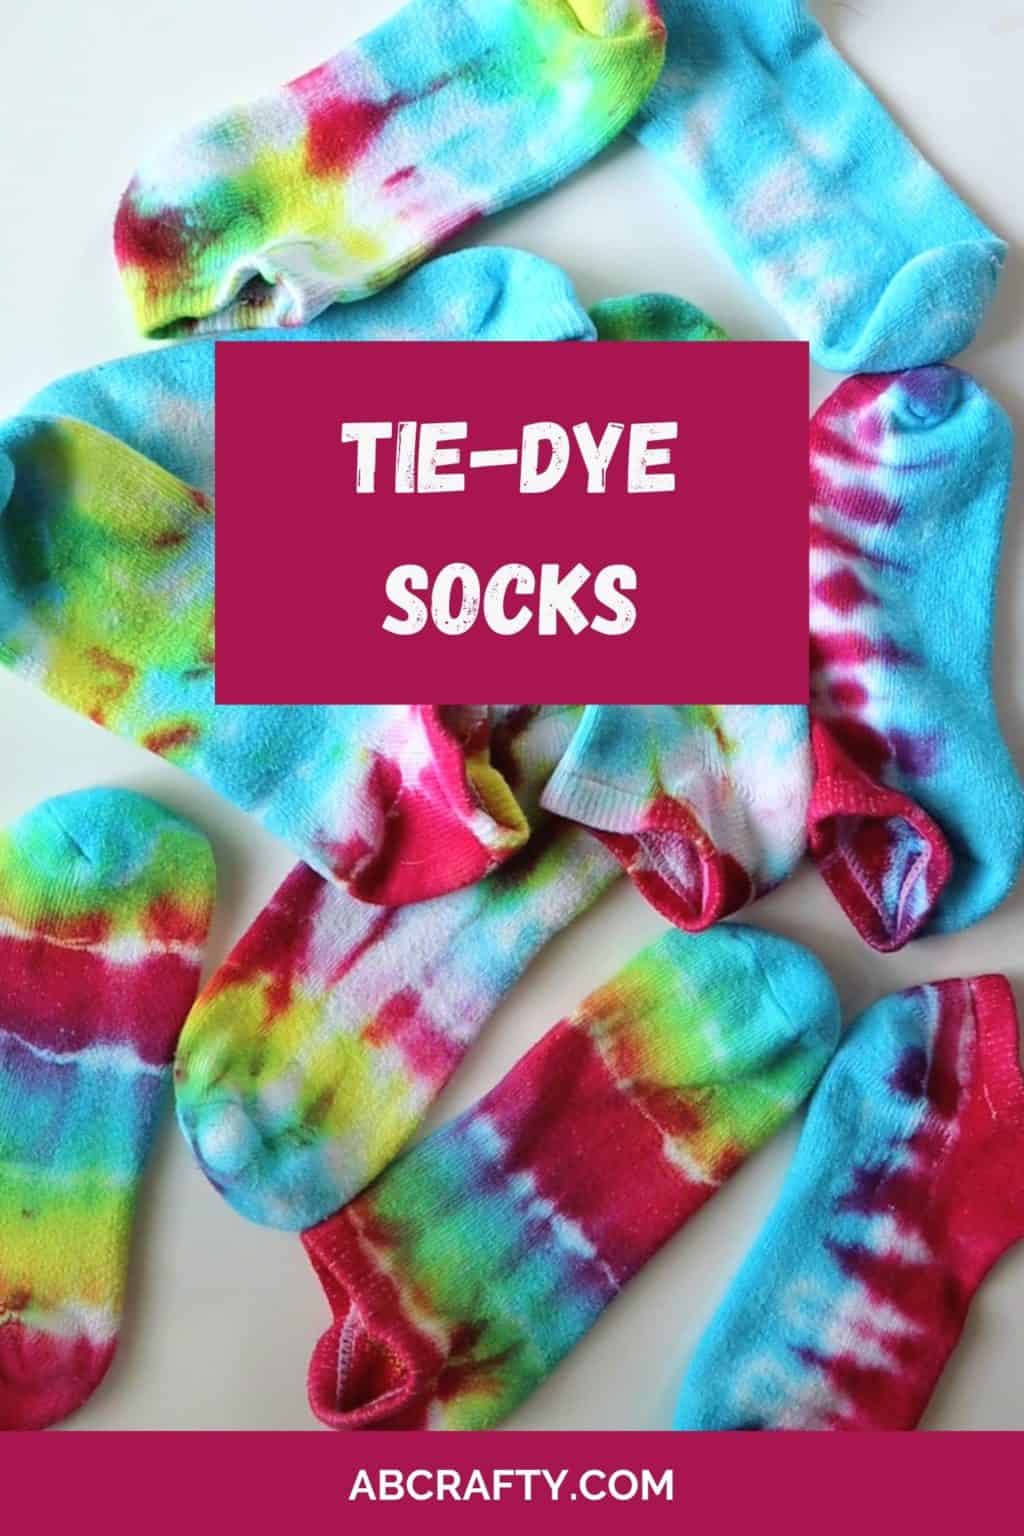 Make Your Own Tie-Dye Family Stockings